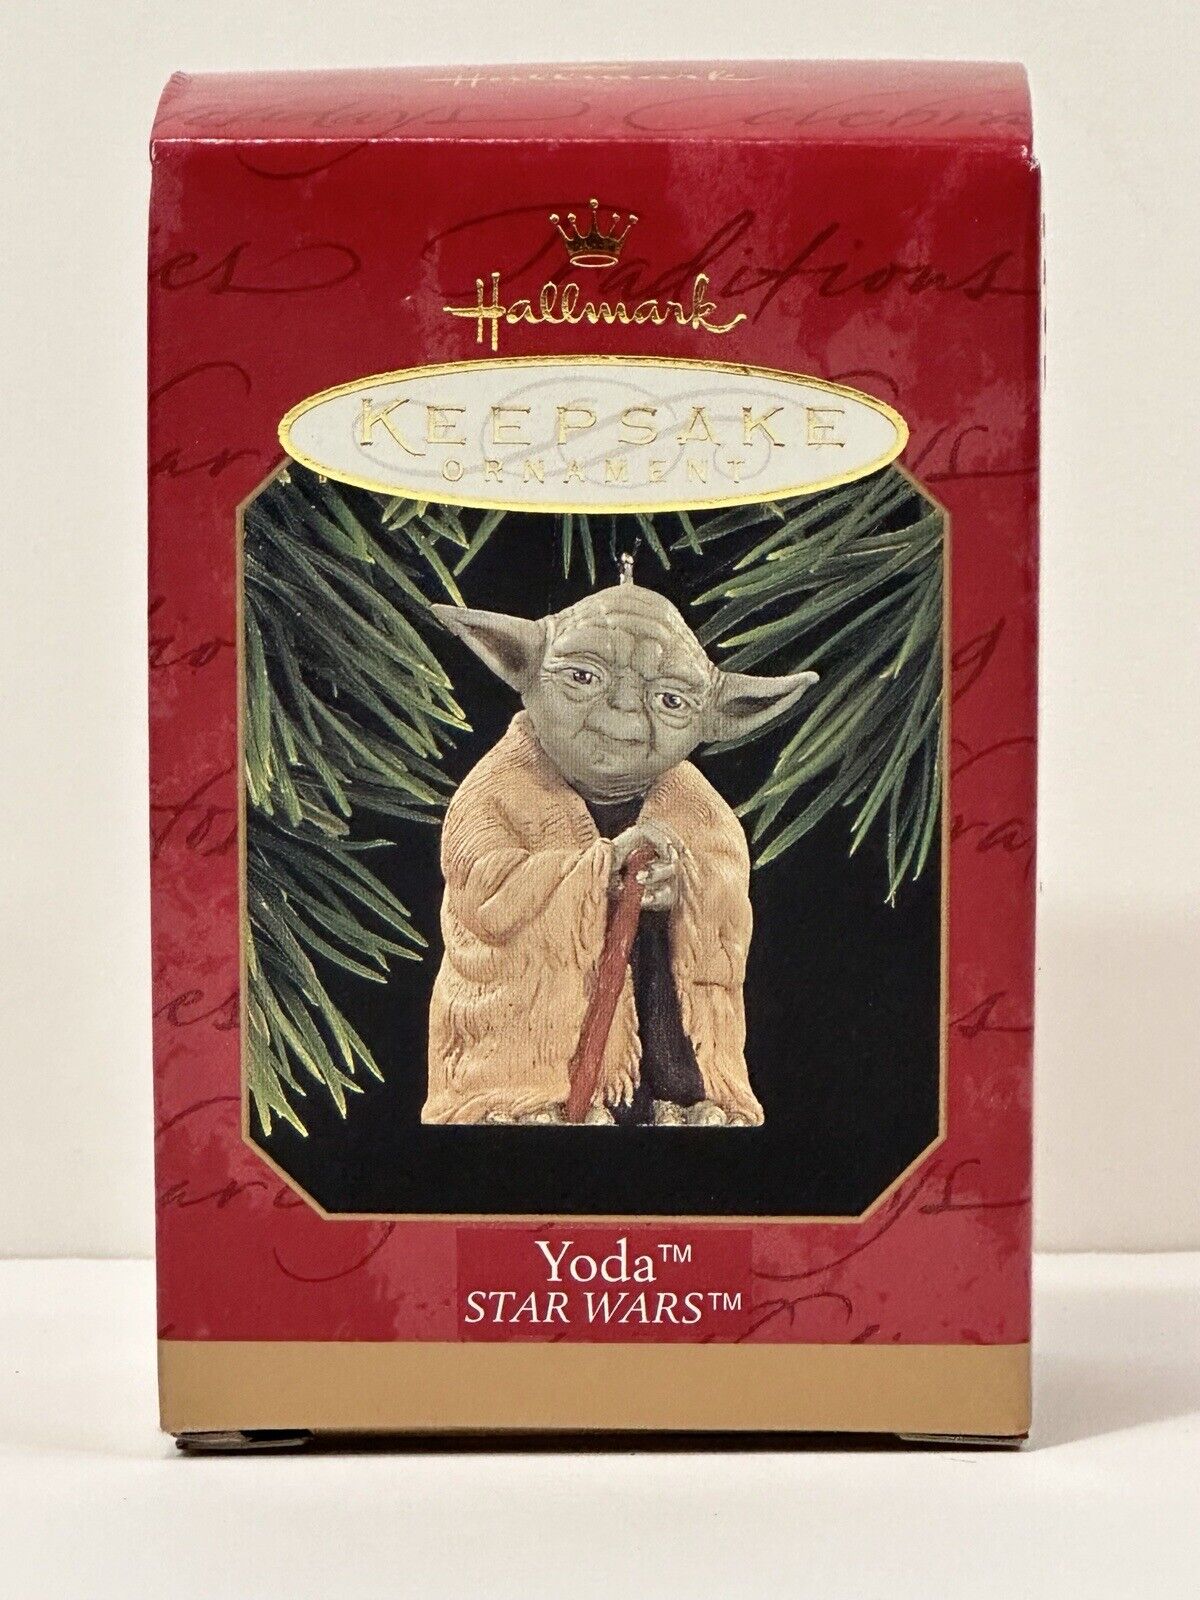 1997 Hallmark Keepsake Star Wars Yoda Ornament *NIB*